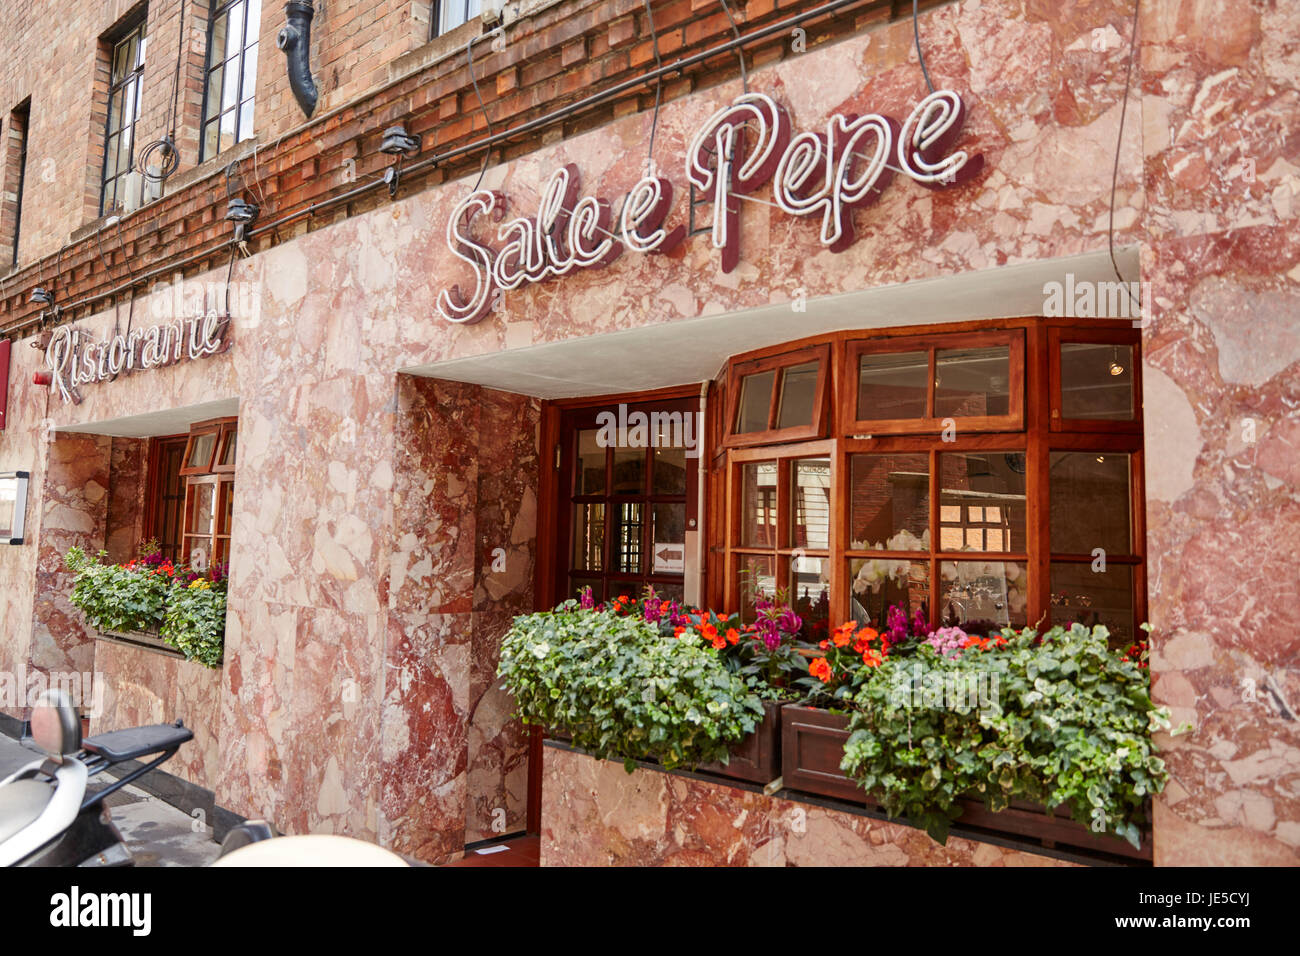 Sale E Pepe, London, UK Stock Photo - Alamy